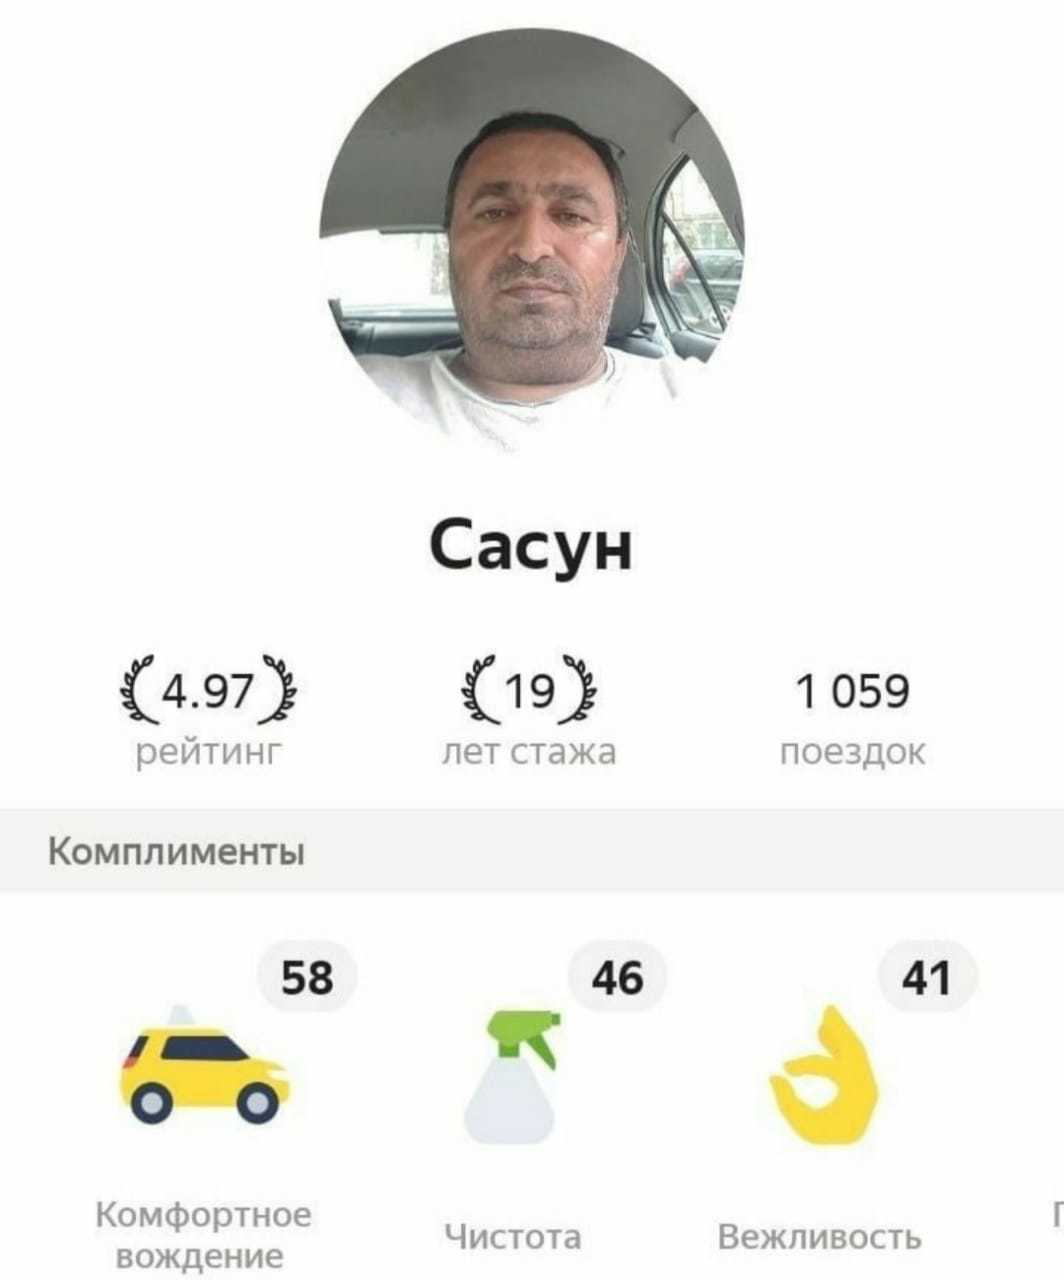 Имена таксистов Яндекс